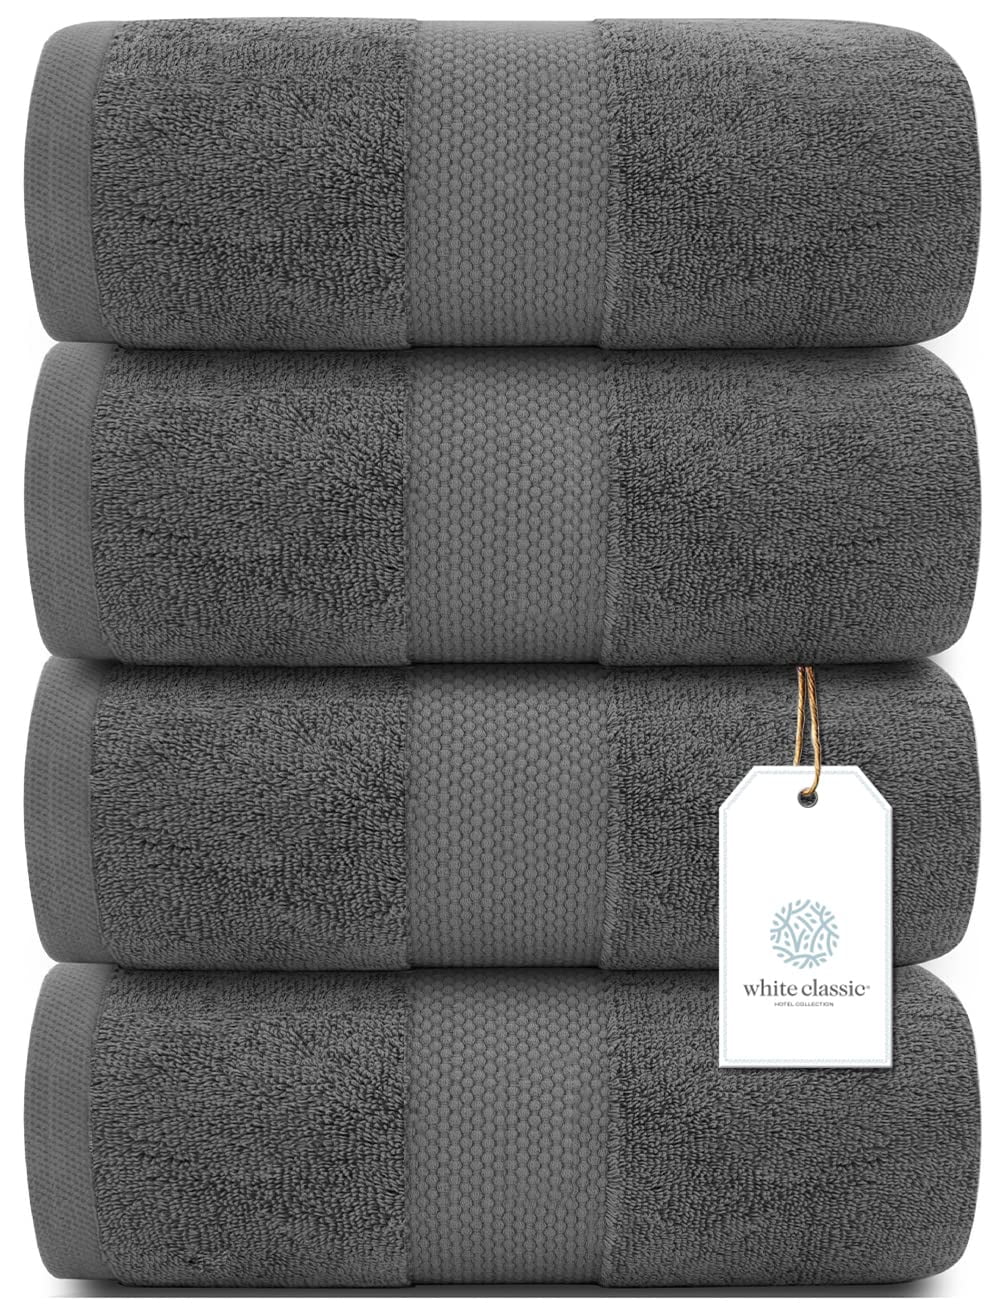 Solid #35 Dark Grey / Straight White Towels